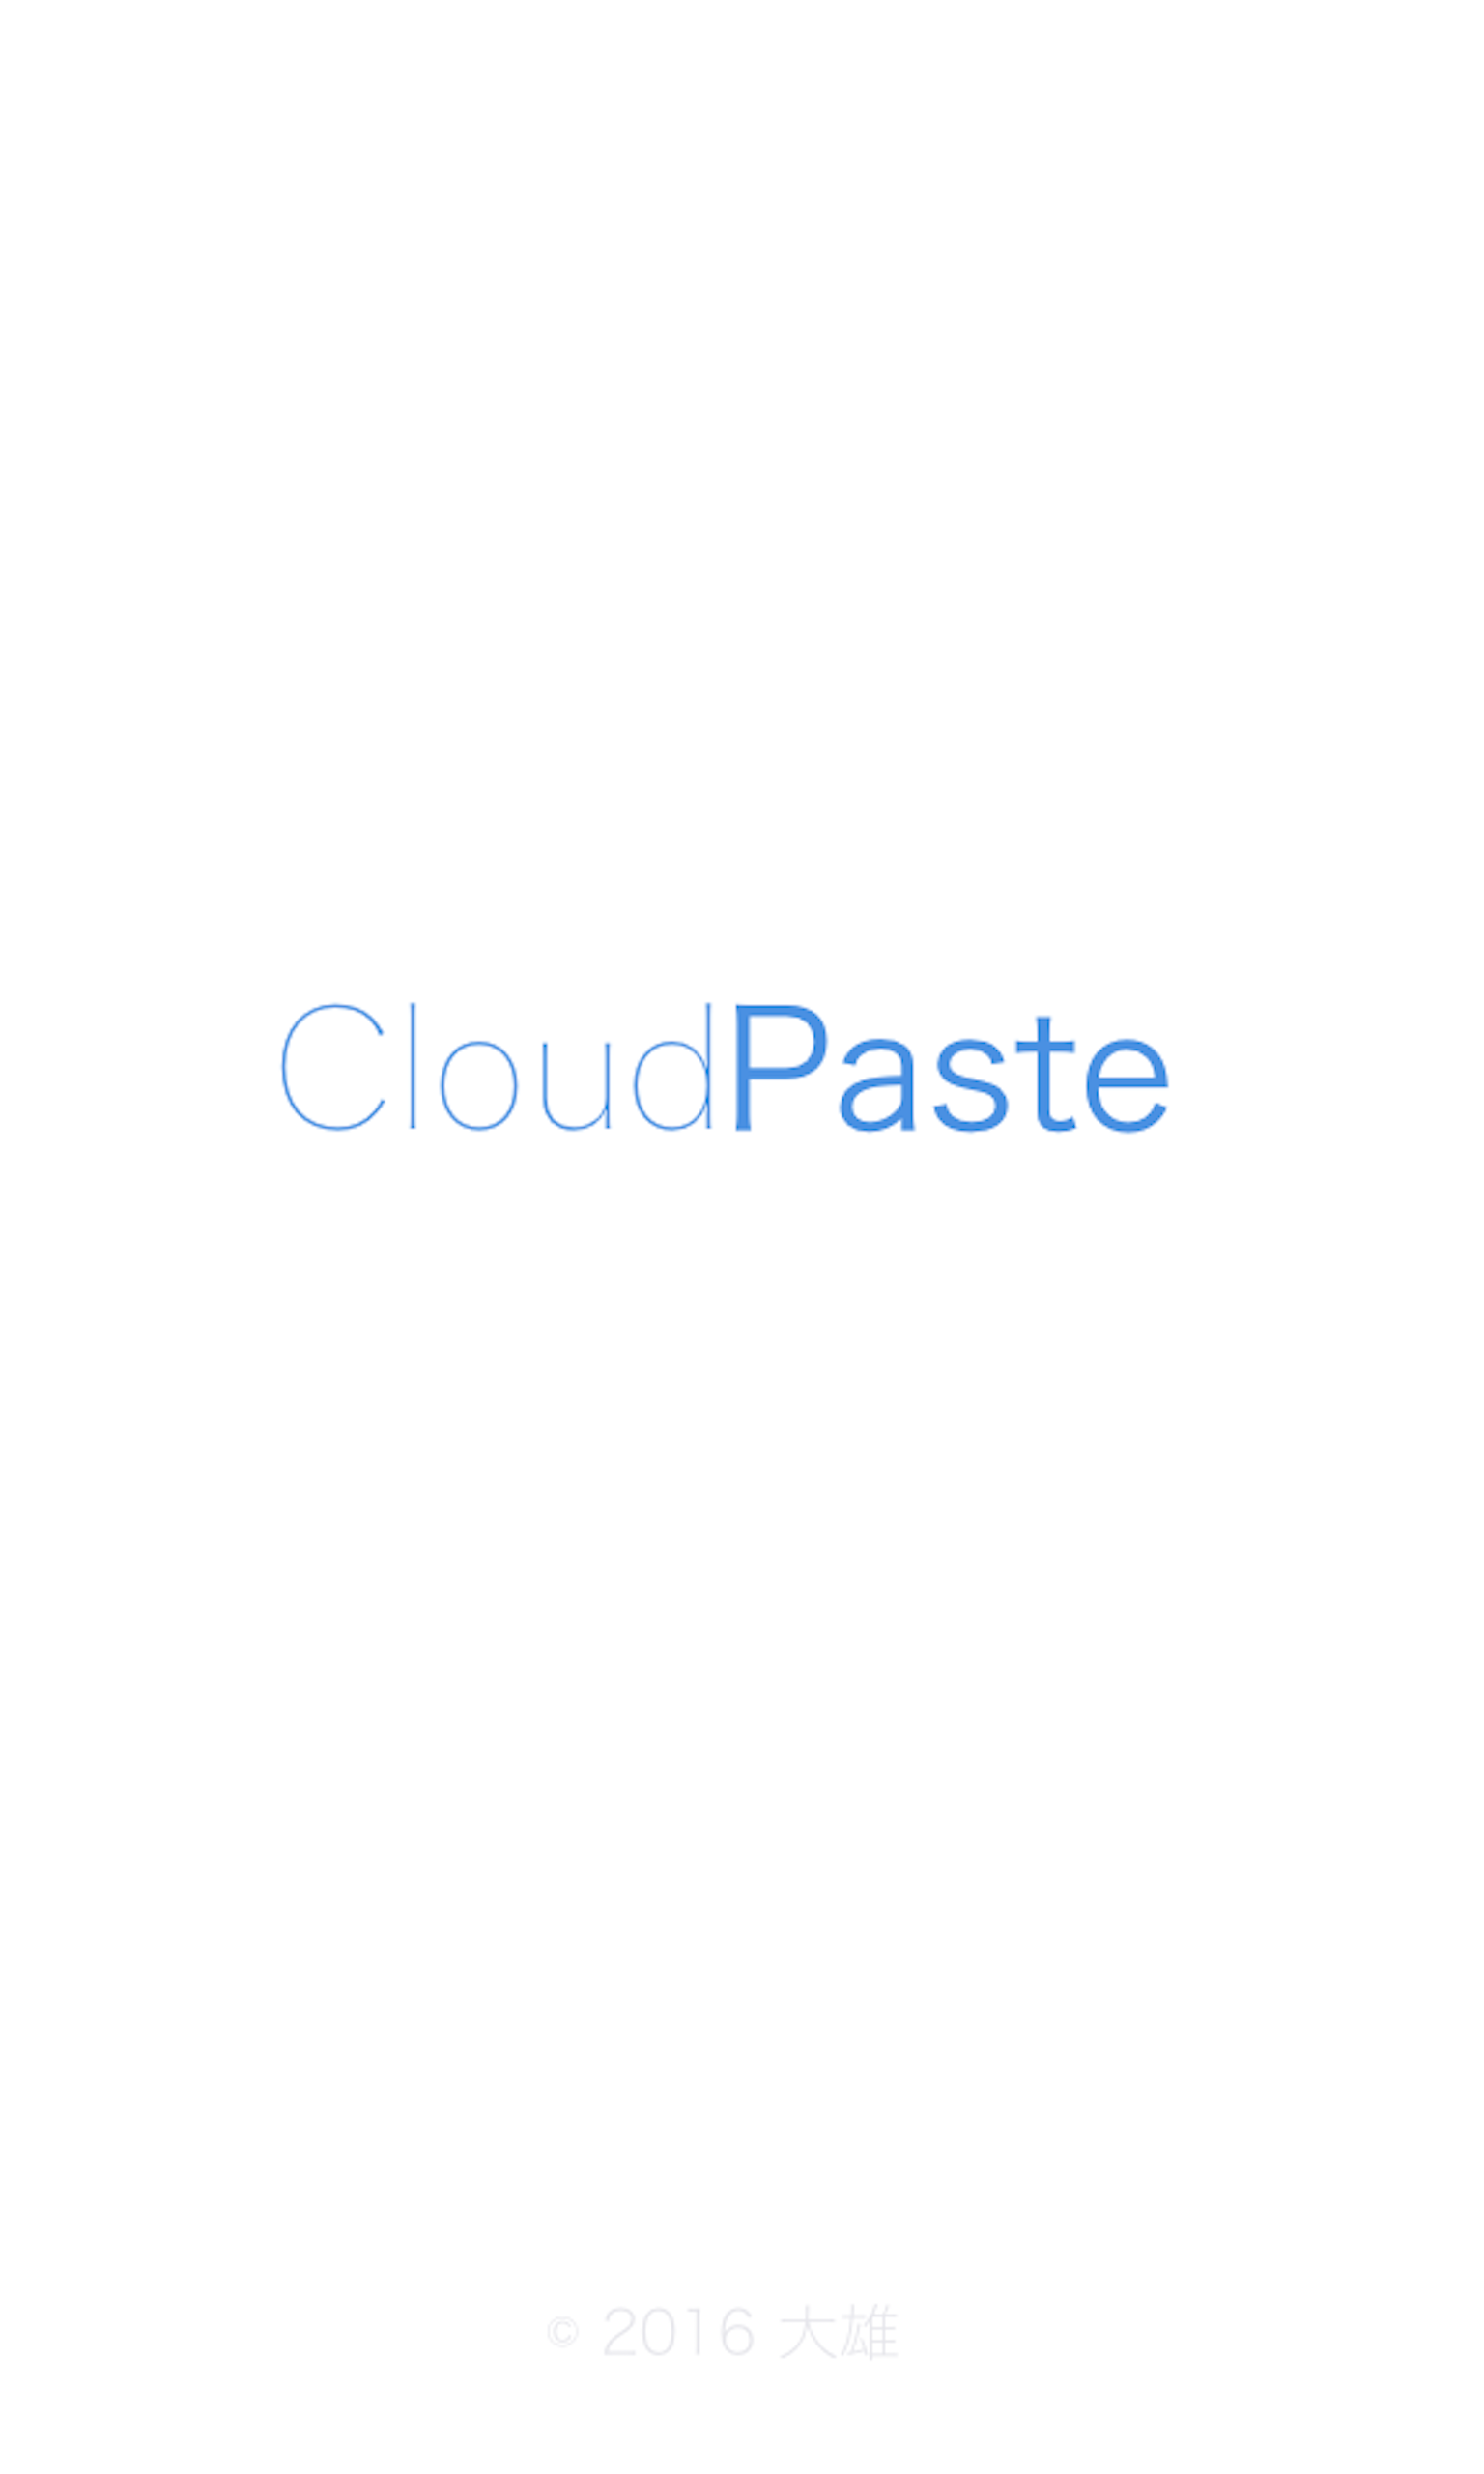 CloudPaste